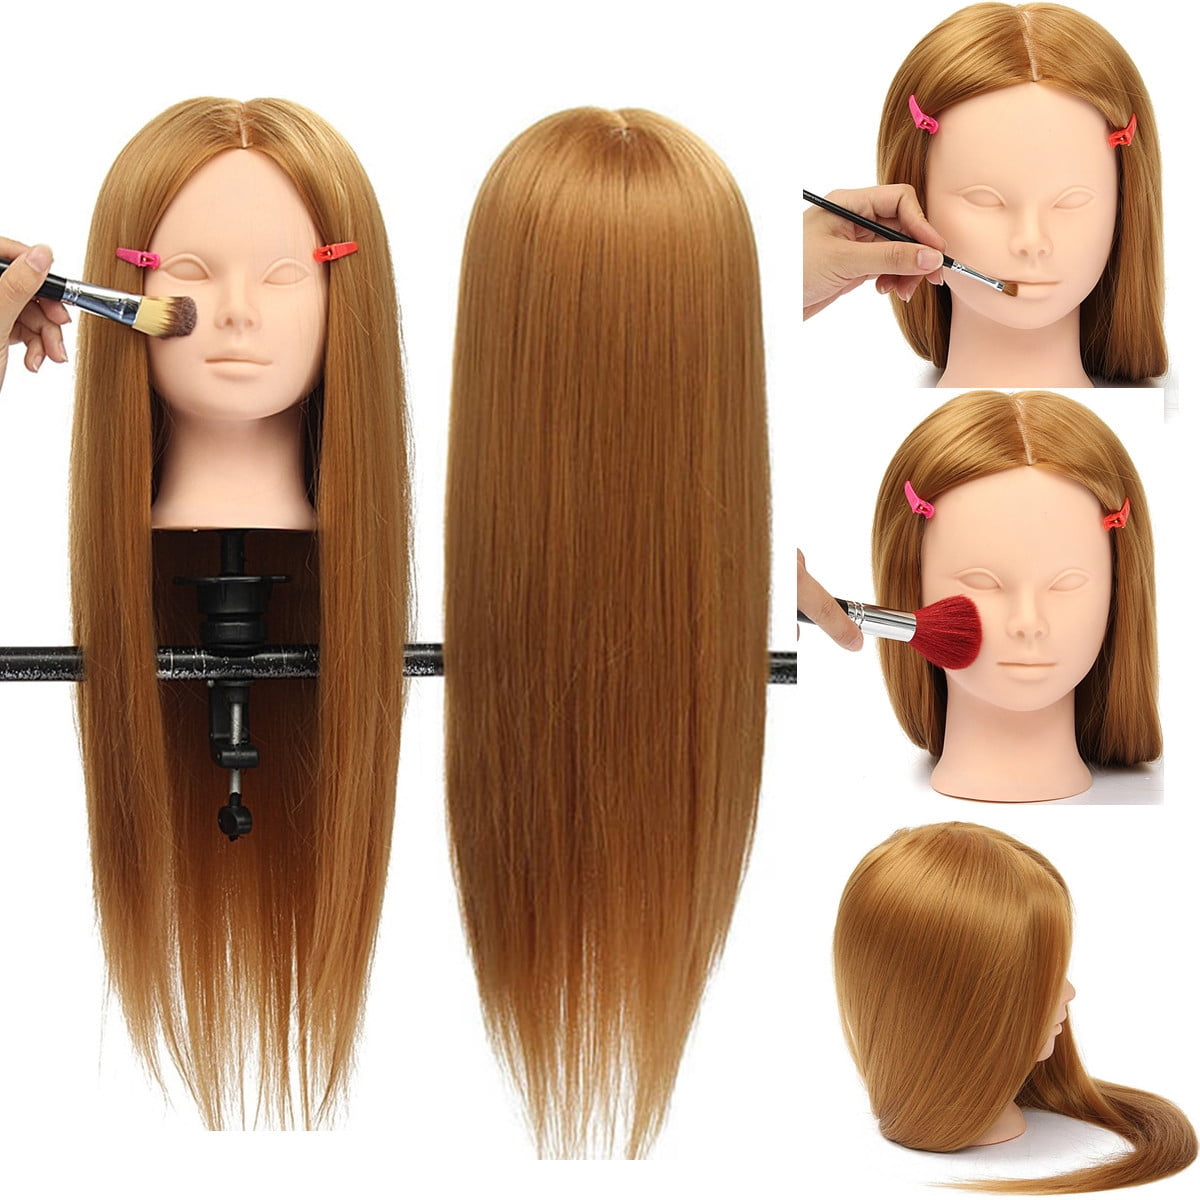 hair styling doll head walmart